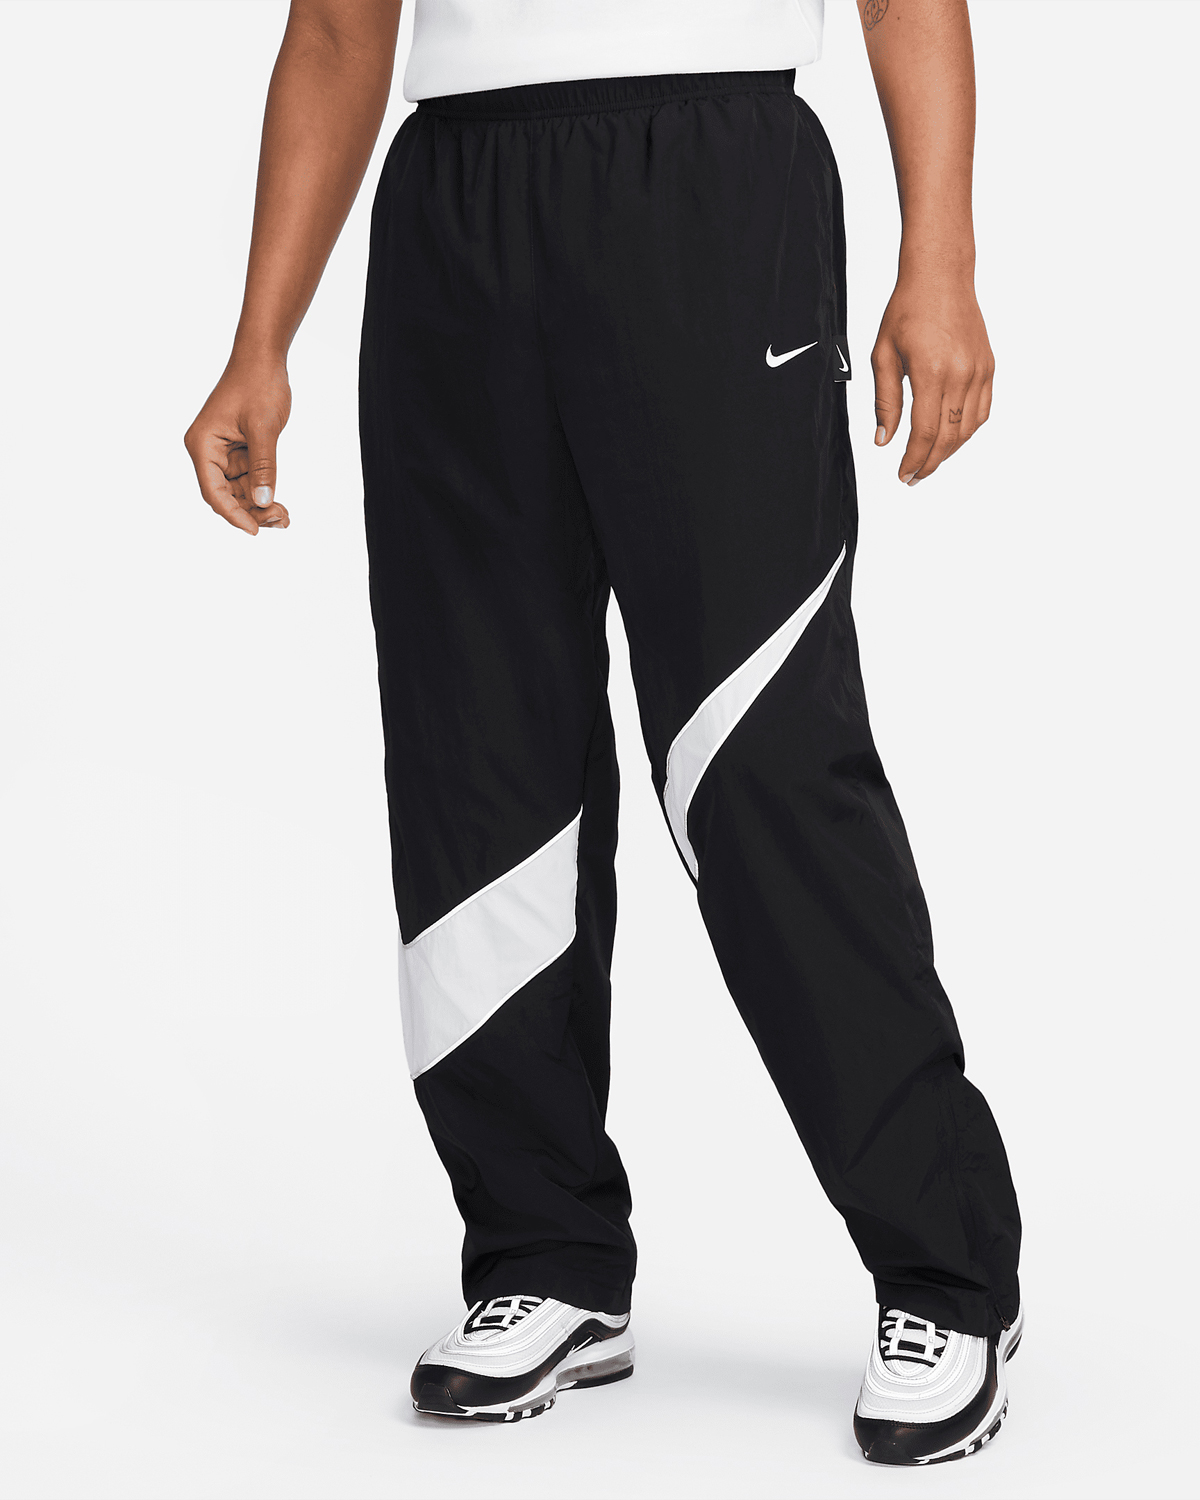 Nike-Sportswear-Swoosh-Woven-Pants-Black-White